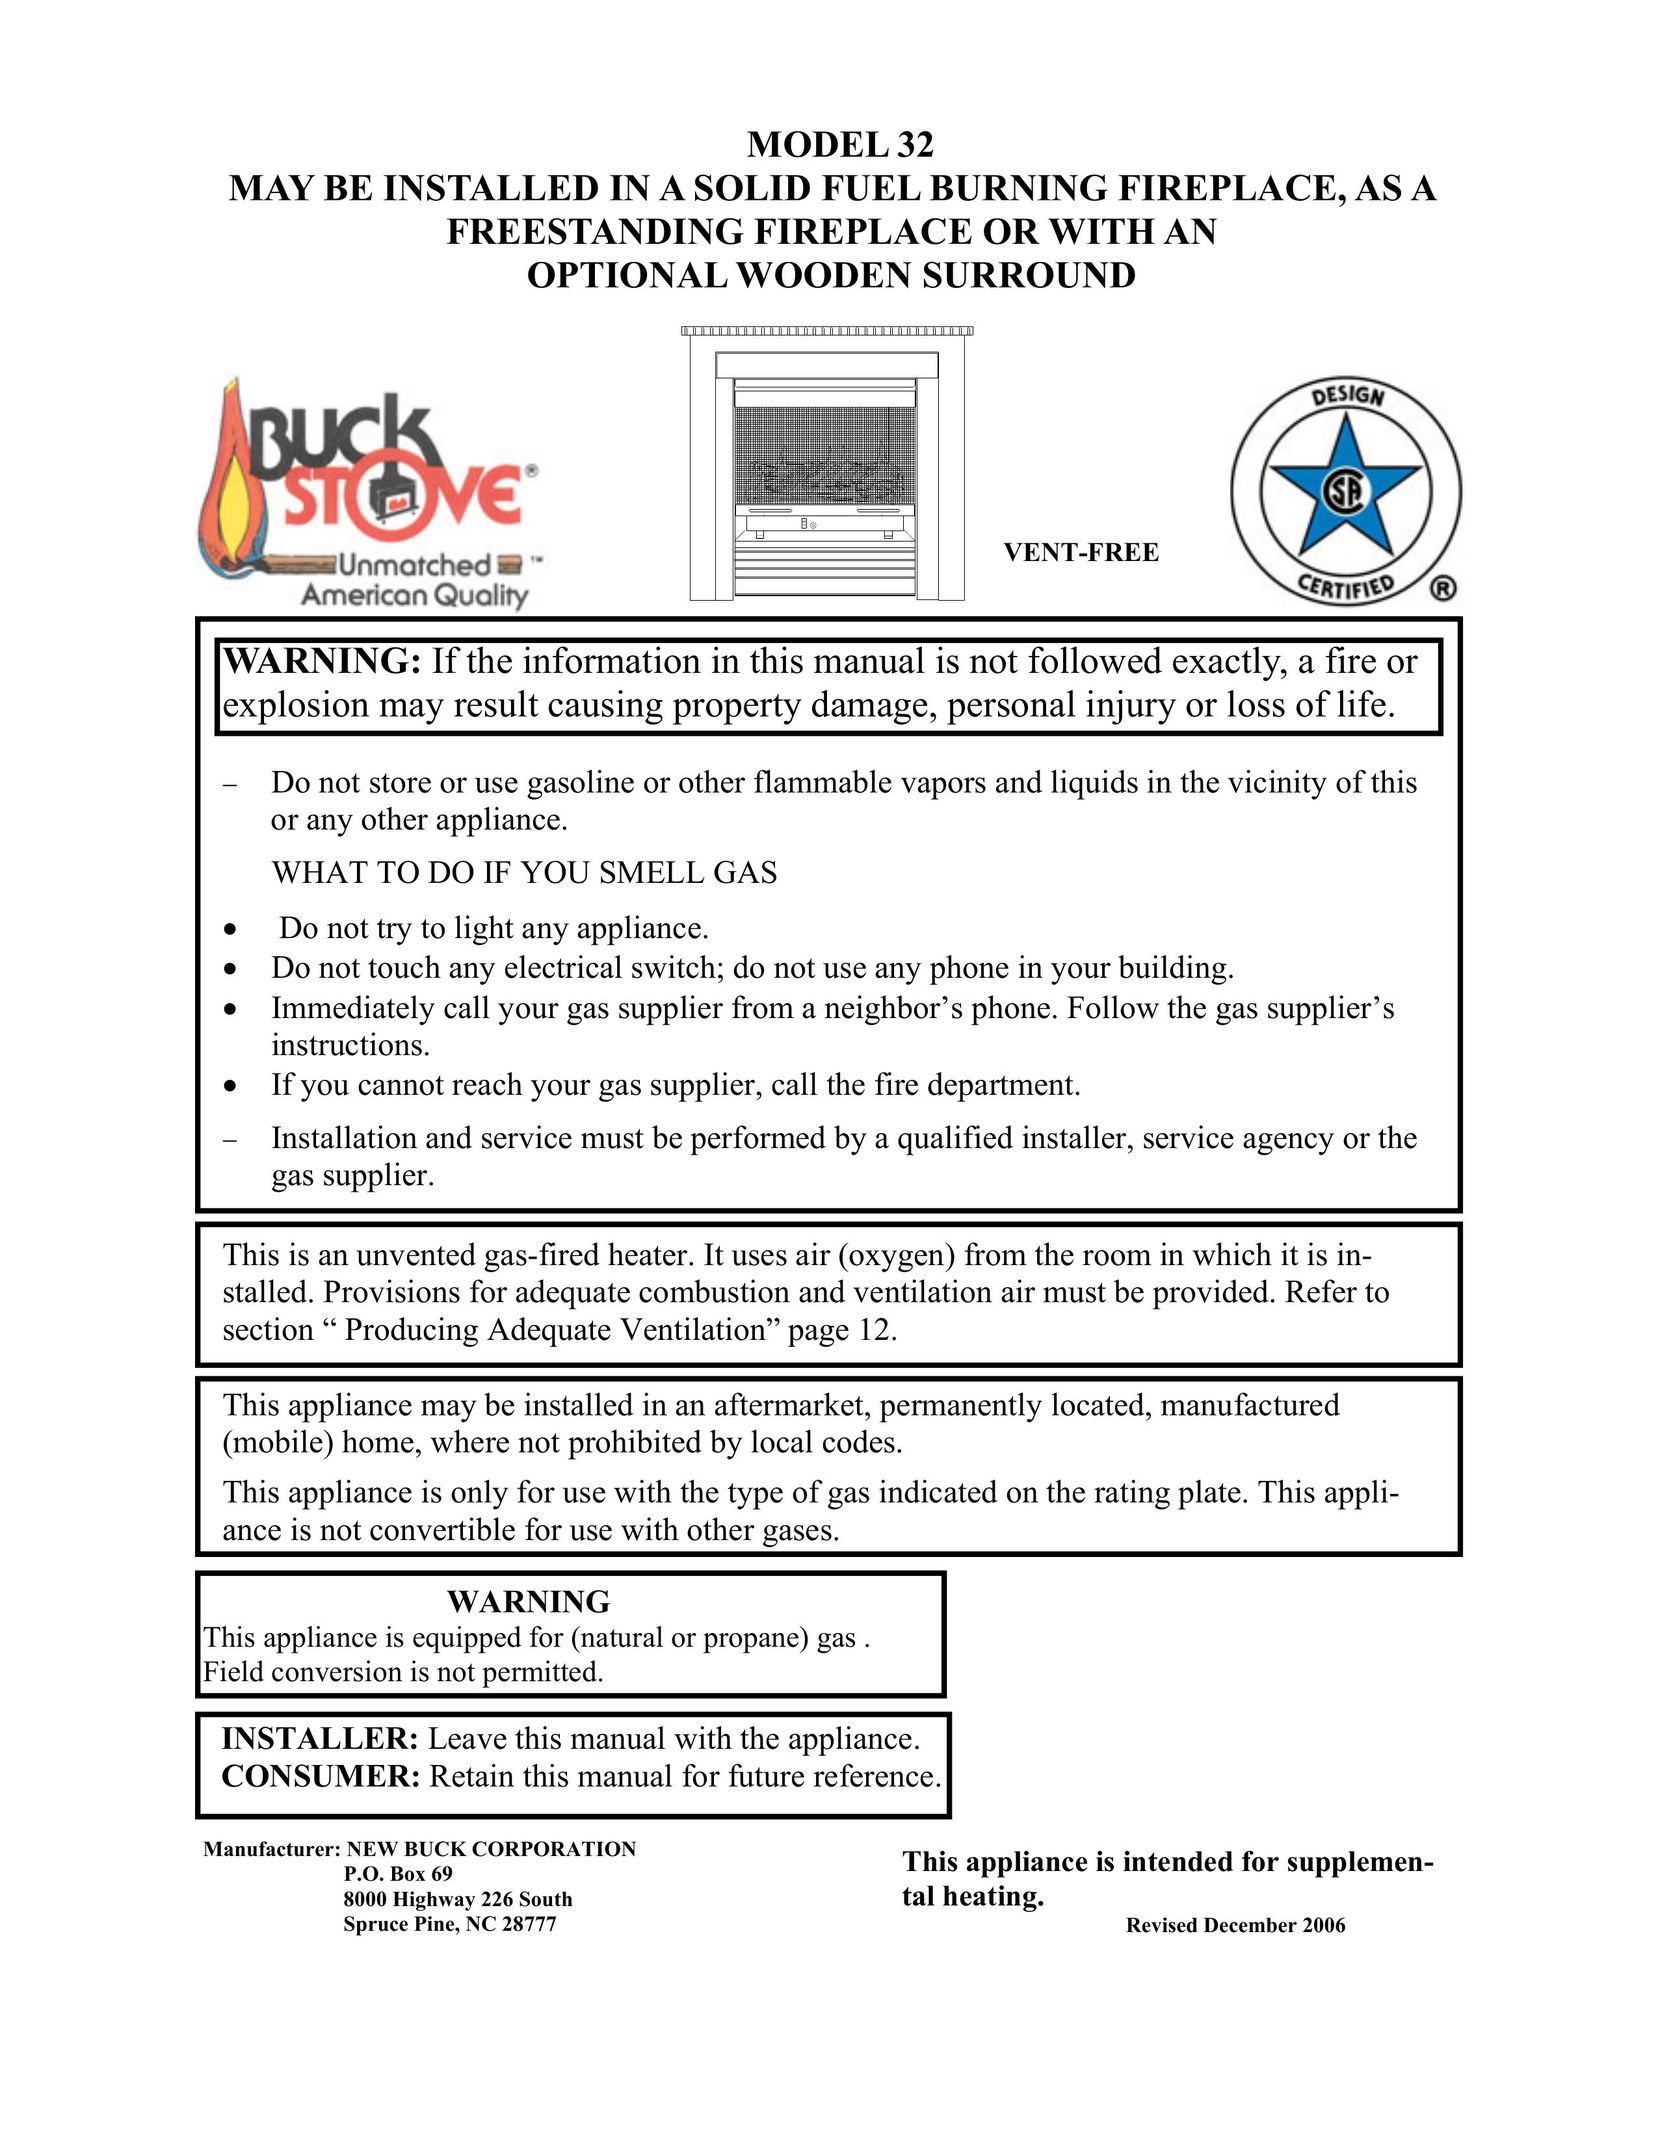 New Buck Corporation 32 Indoor Fireplace User Manual